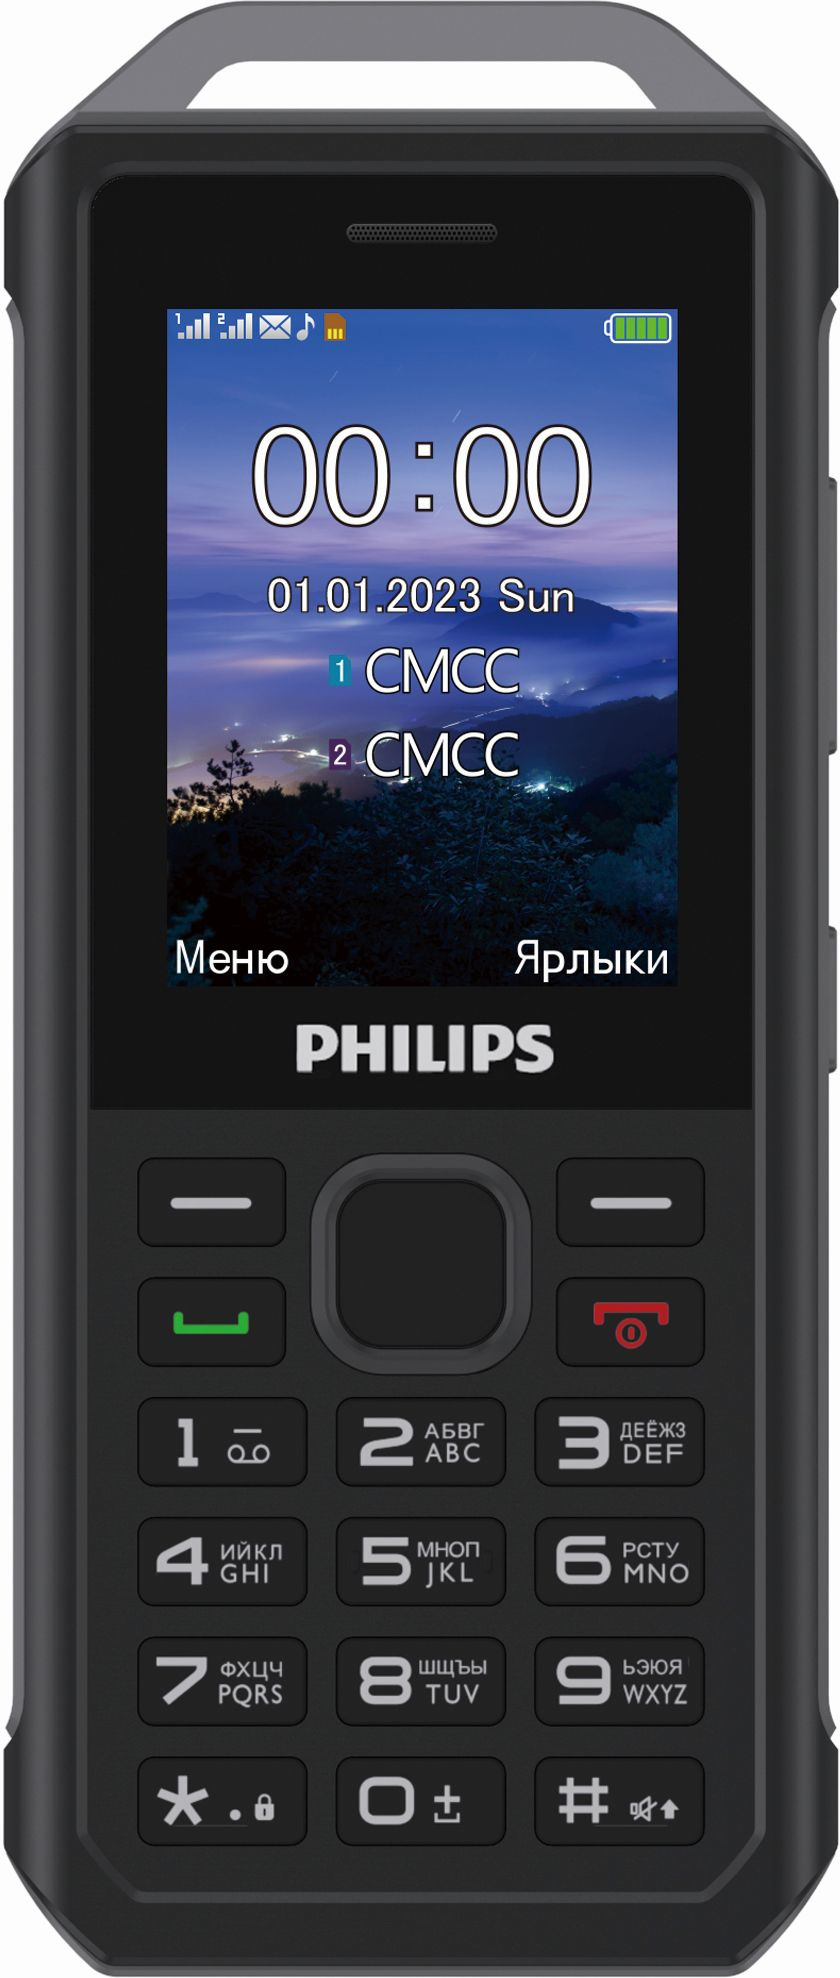 Мобильный телефон Philips E2317 Xenium темно-серый моноблок 2Sim 2.4" 240x320 Nucleus 0.3Mpix GSM900/ 1800 MP3 FM microSD max32Gb (CTE2317DG/00)